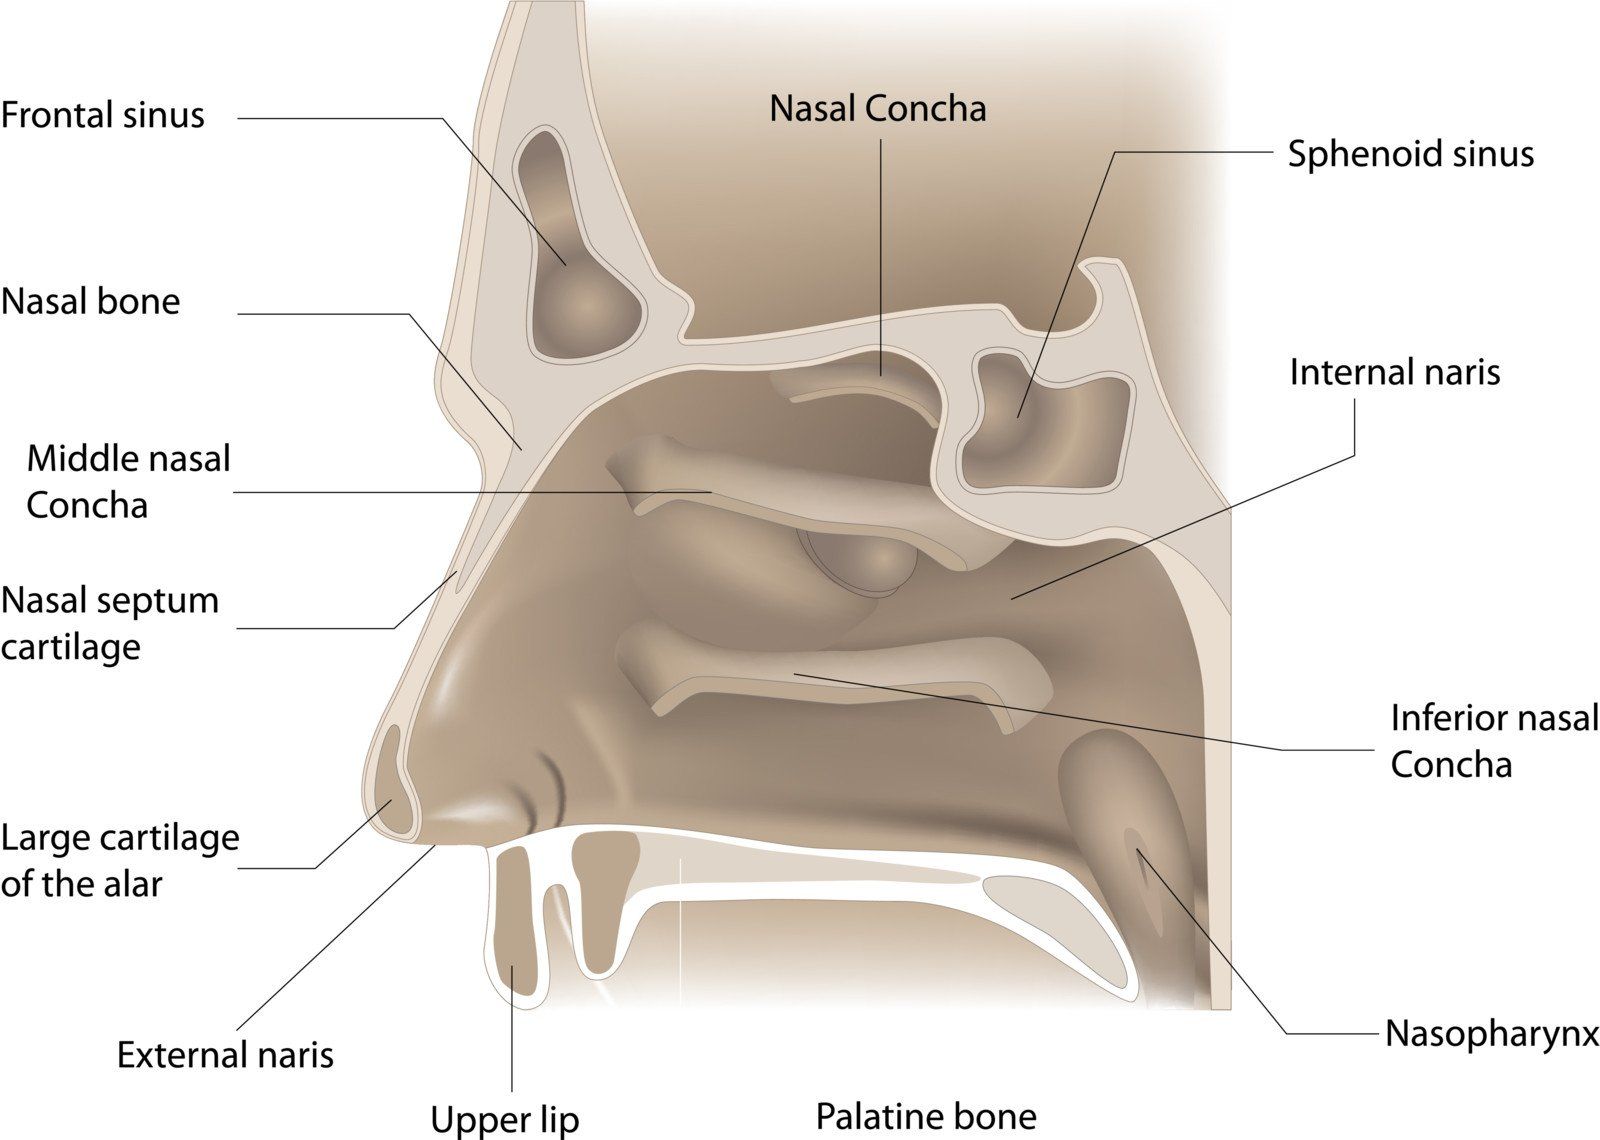 Nose anatomy showing the inferior turbinates and nasal septum